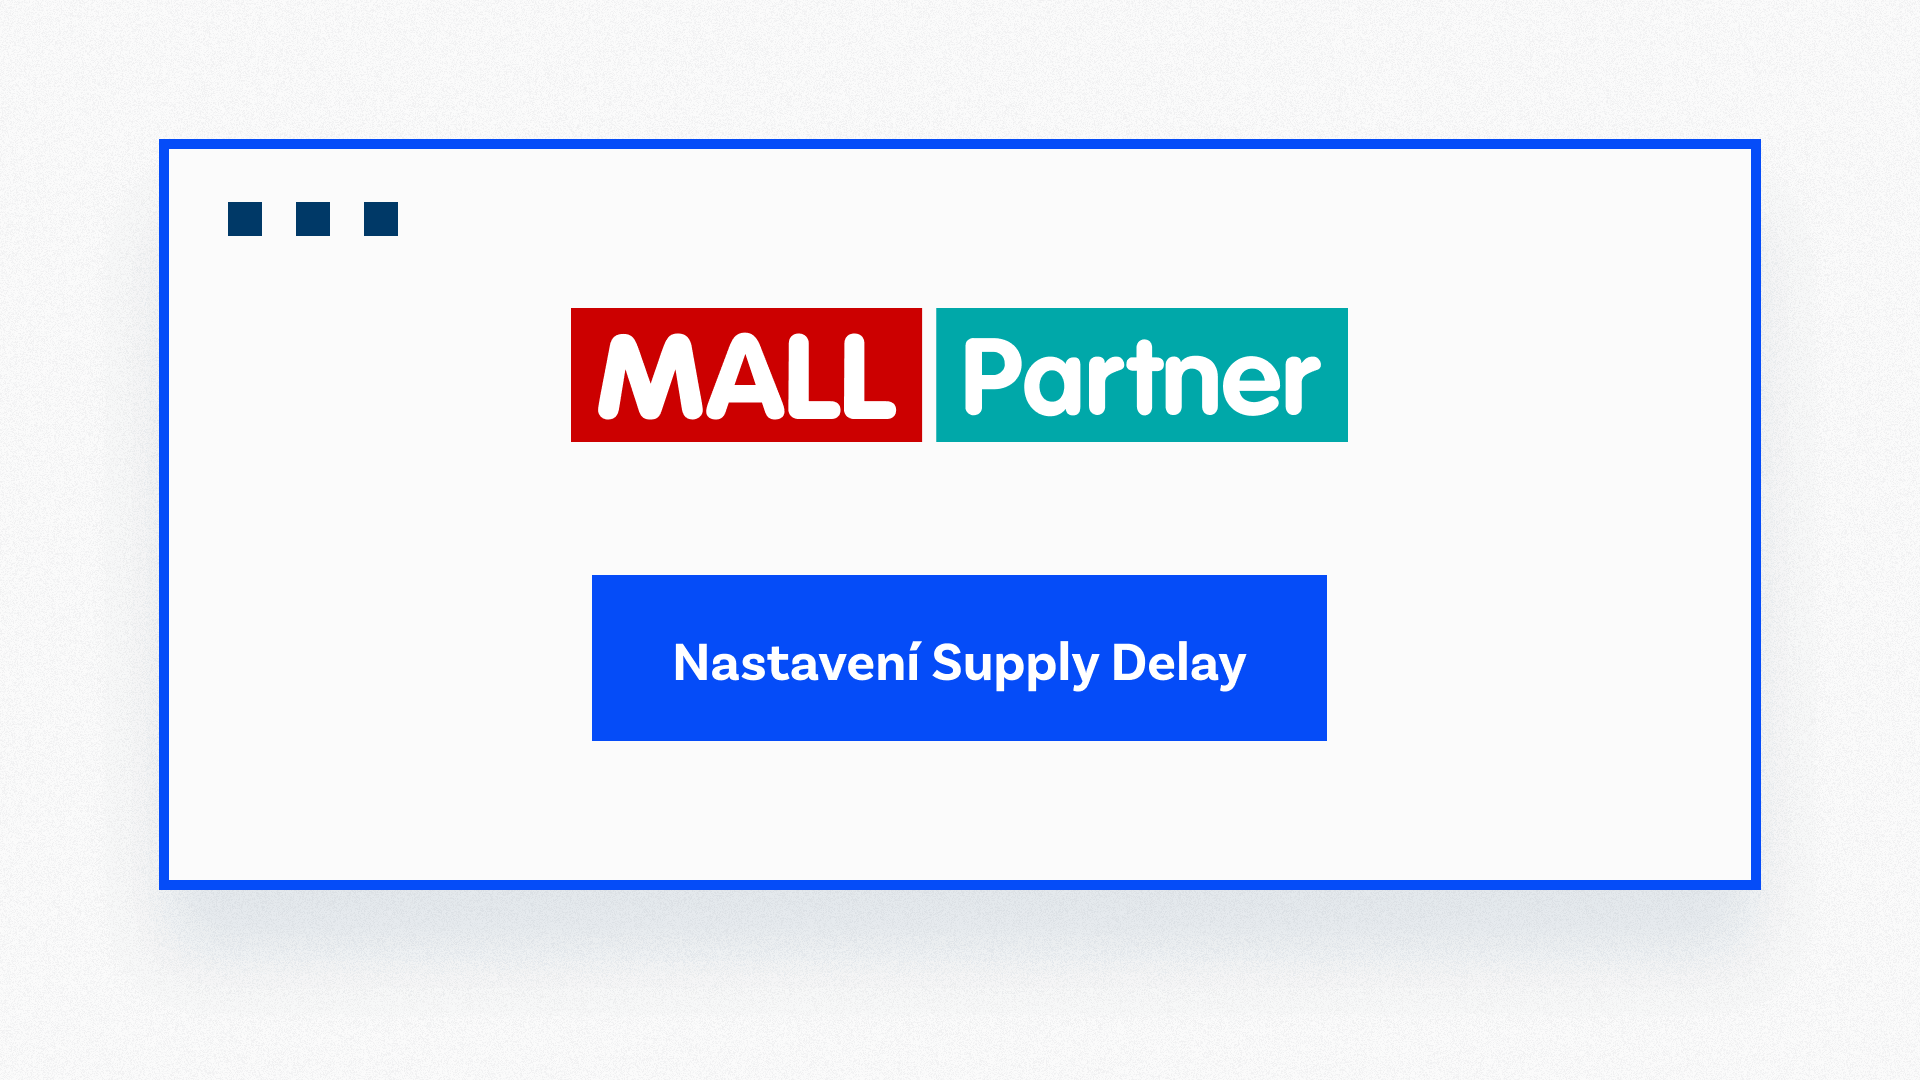 Nastavení Supply Delay v MALL Partner, Vše o marketplace